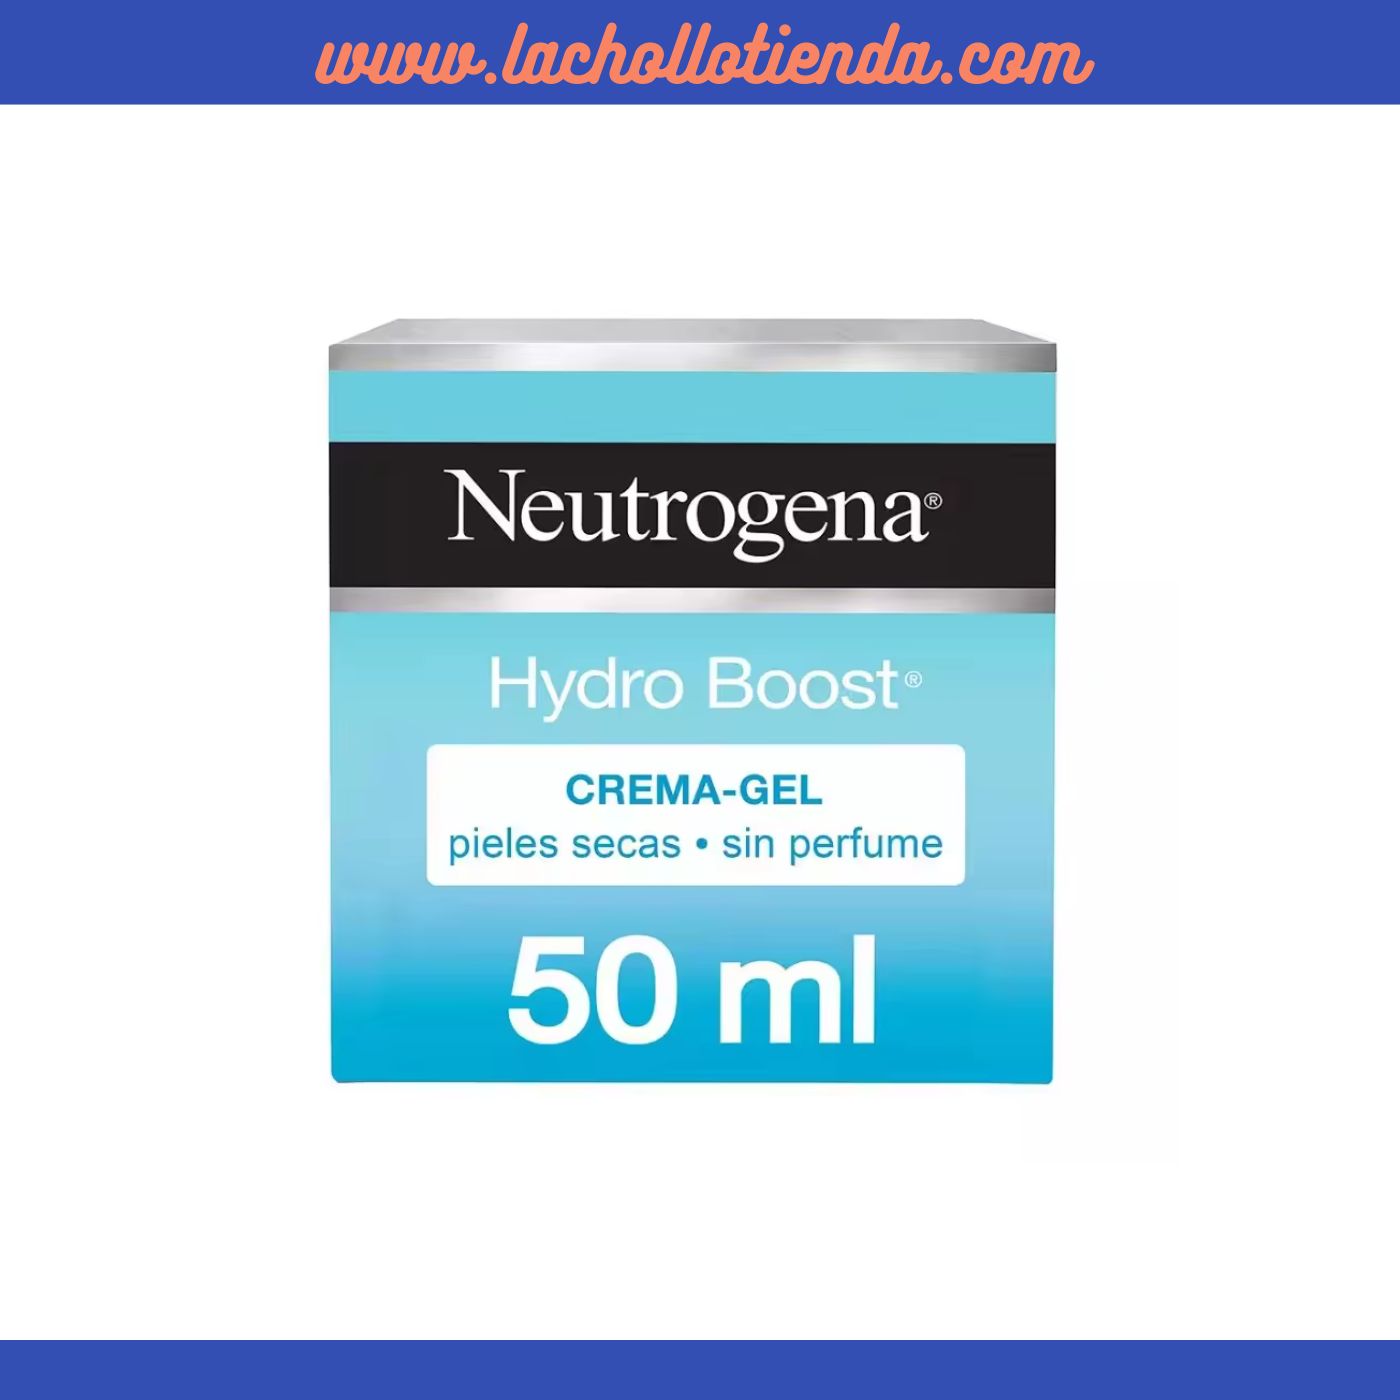 NEUTROGENA - Crema Gel Hydro Boost con acido hialurónico 50ml.